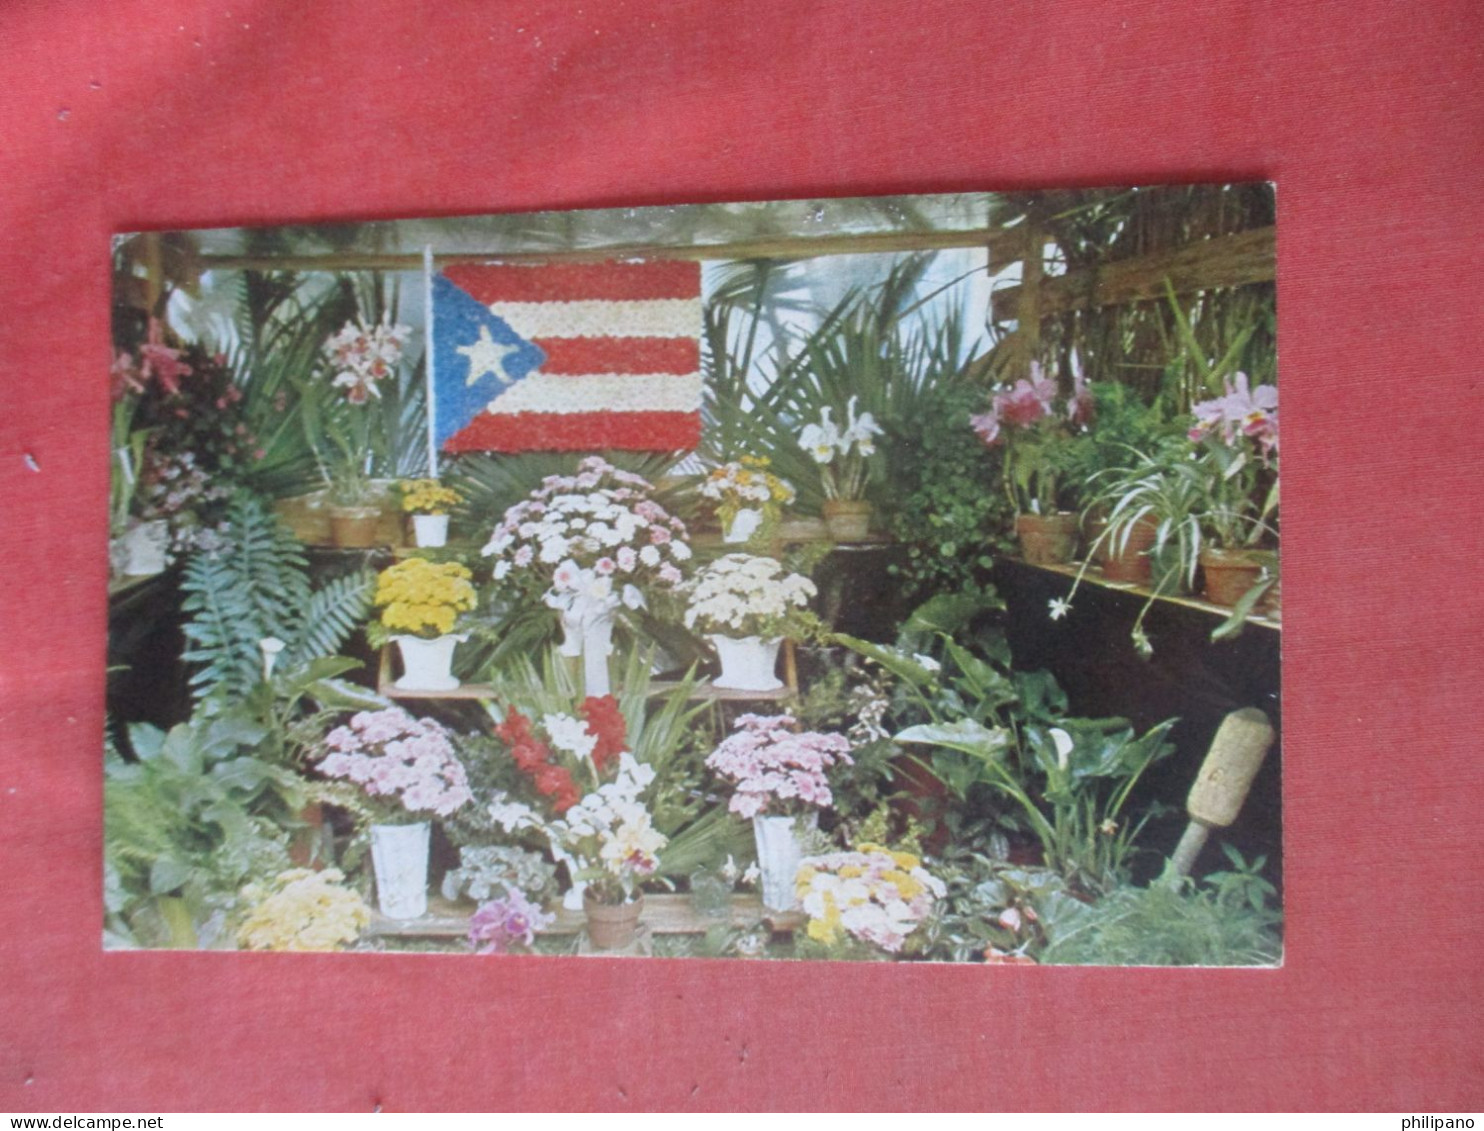 Annual Flower Exhibition Aibonito  > Puerto Rico  Ref 6141 - Puerto Rico